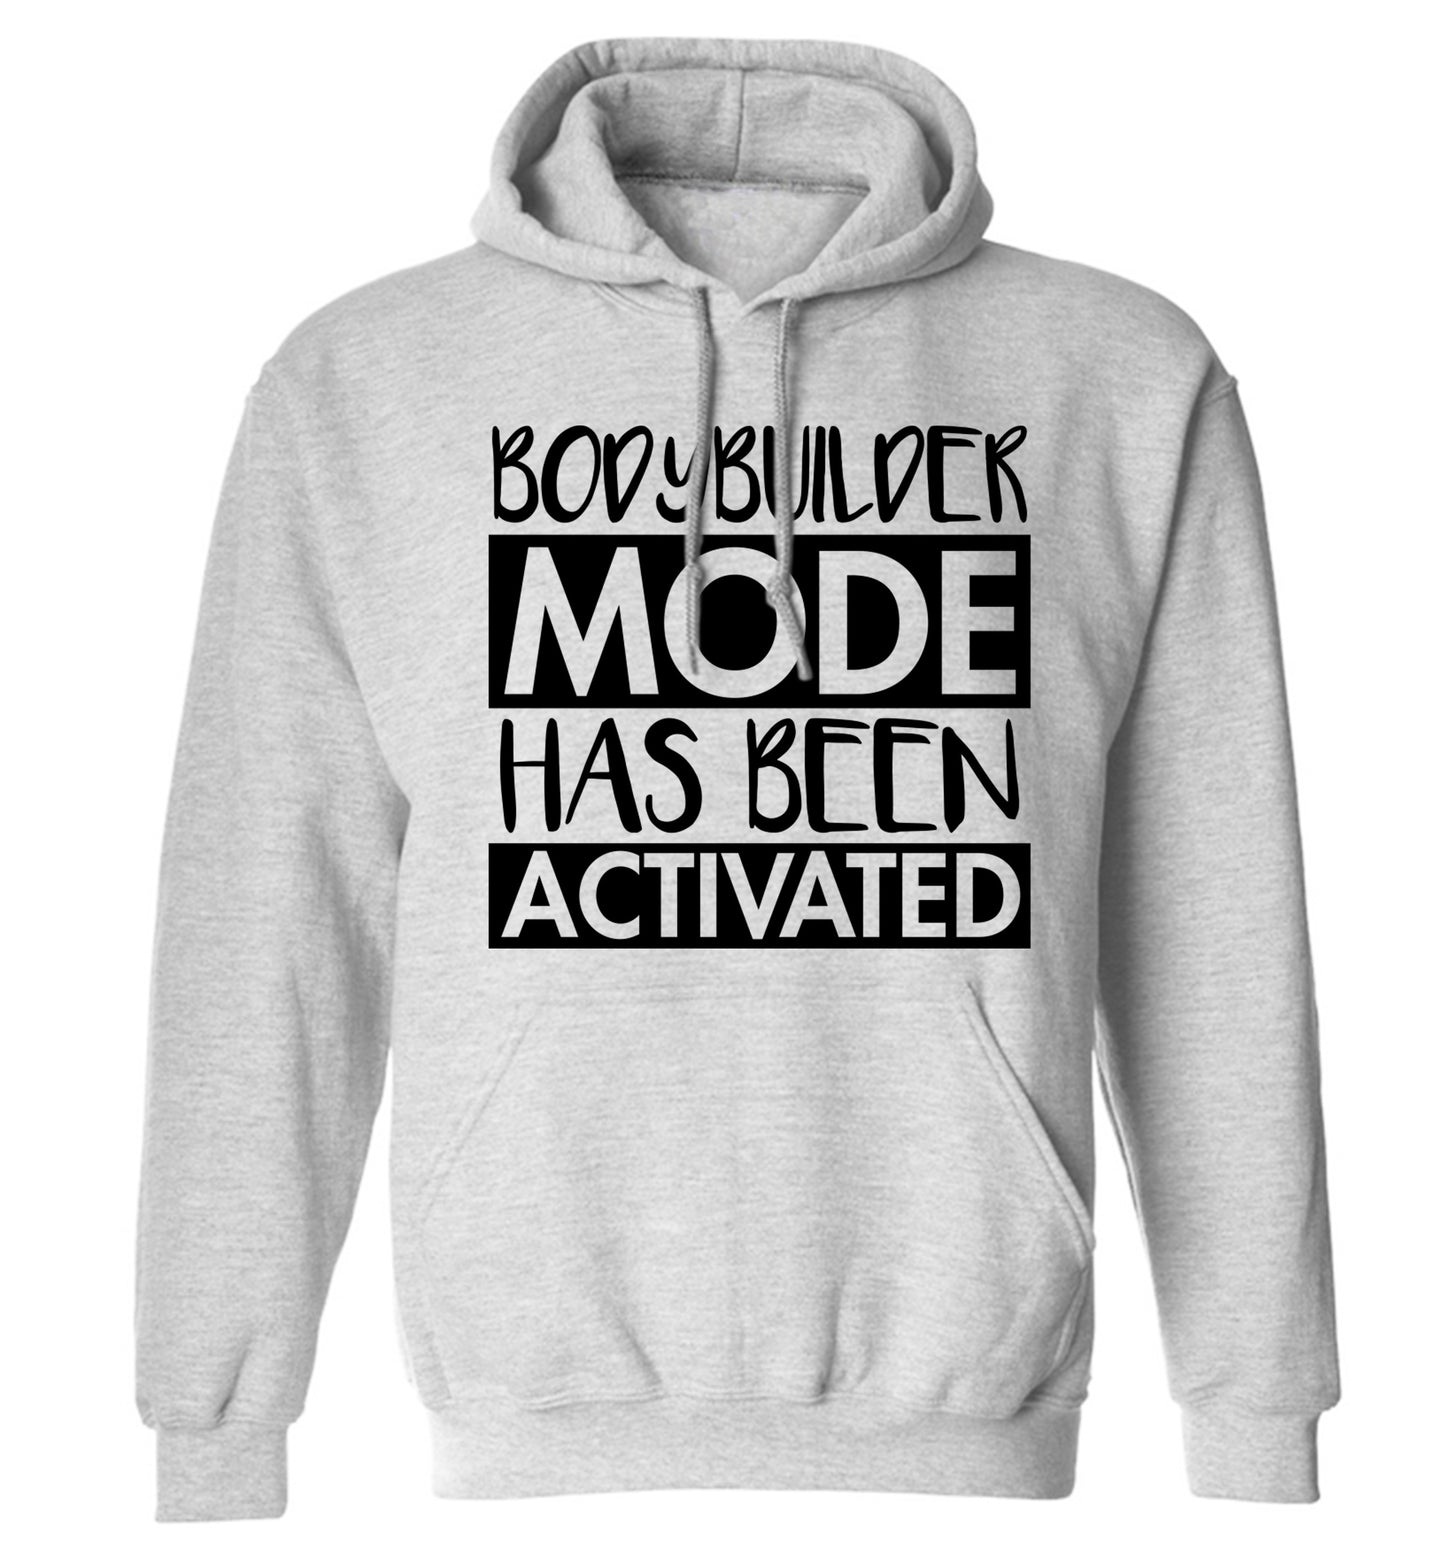 Bodybuilder mode activated adults unisex grey hoodie 2XL